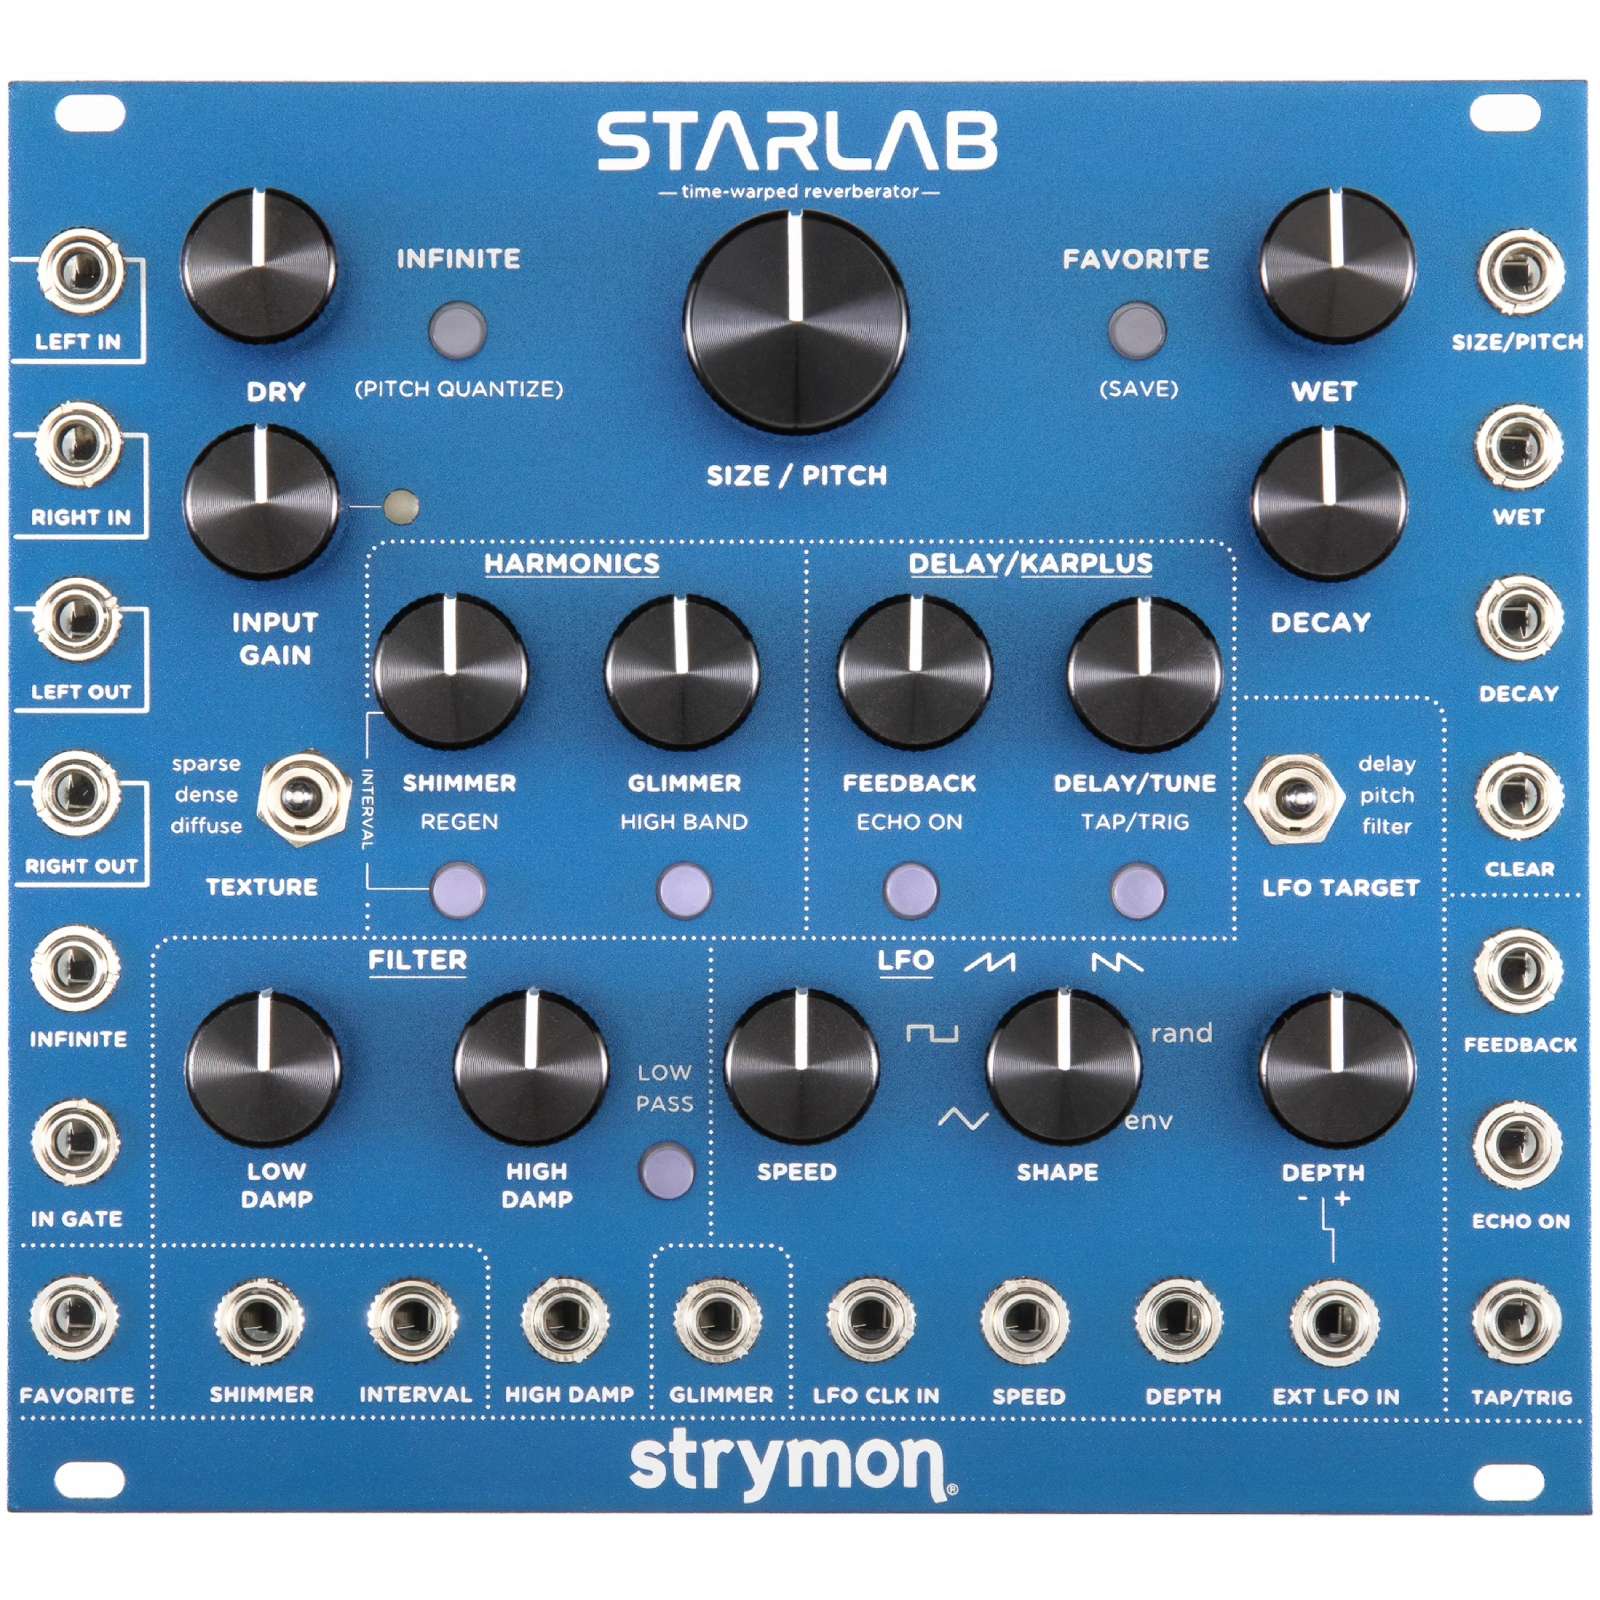 STRYMON STARLAB - TIME WARPED REVERBERATOR